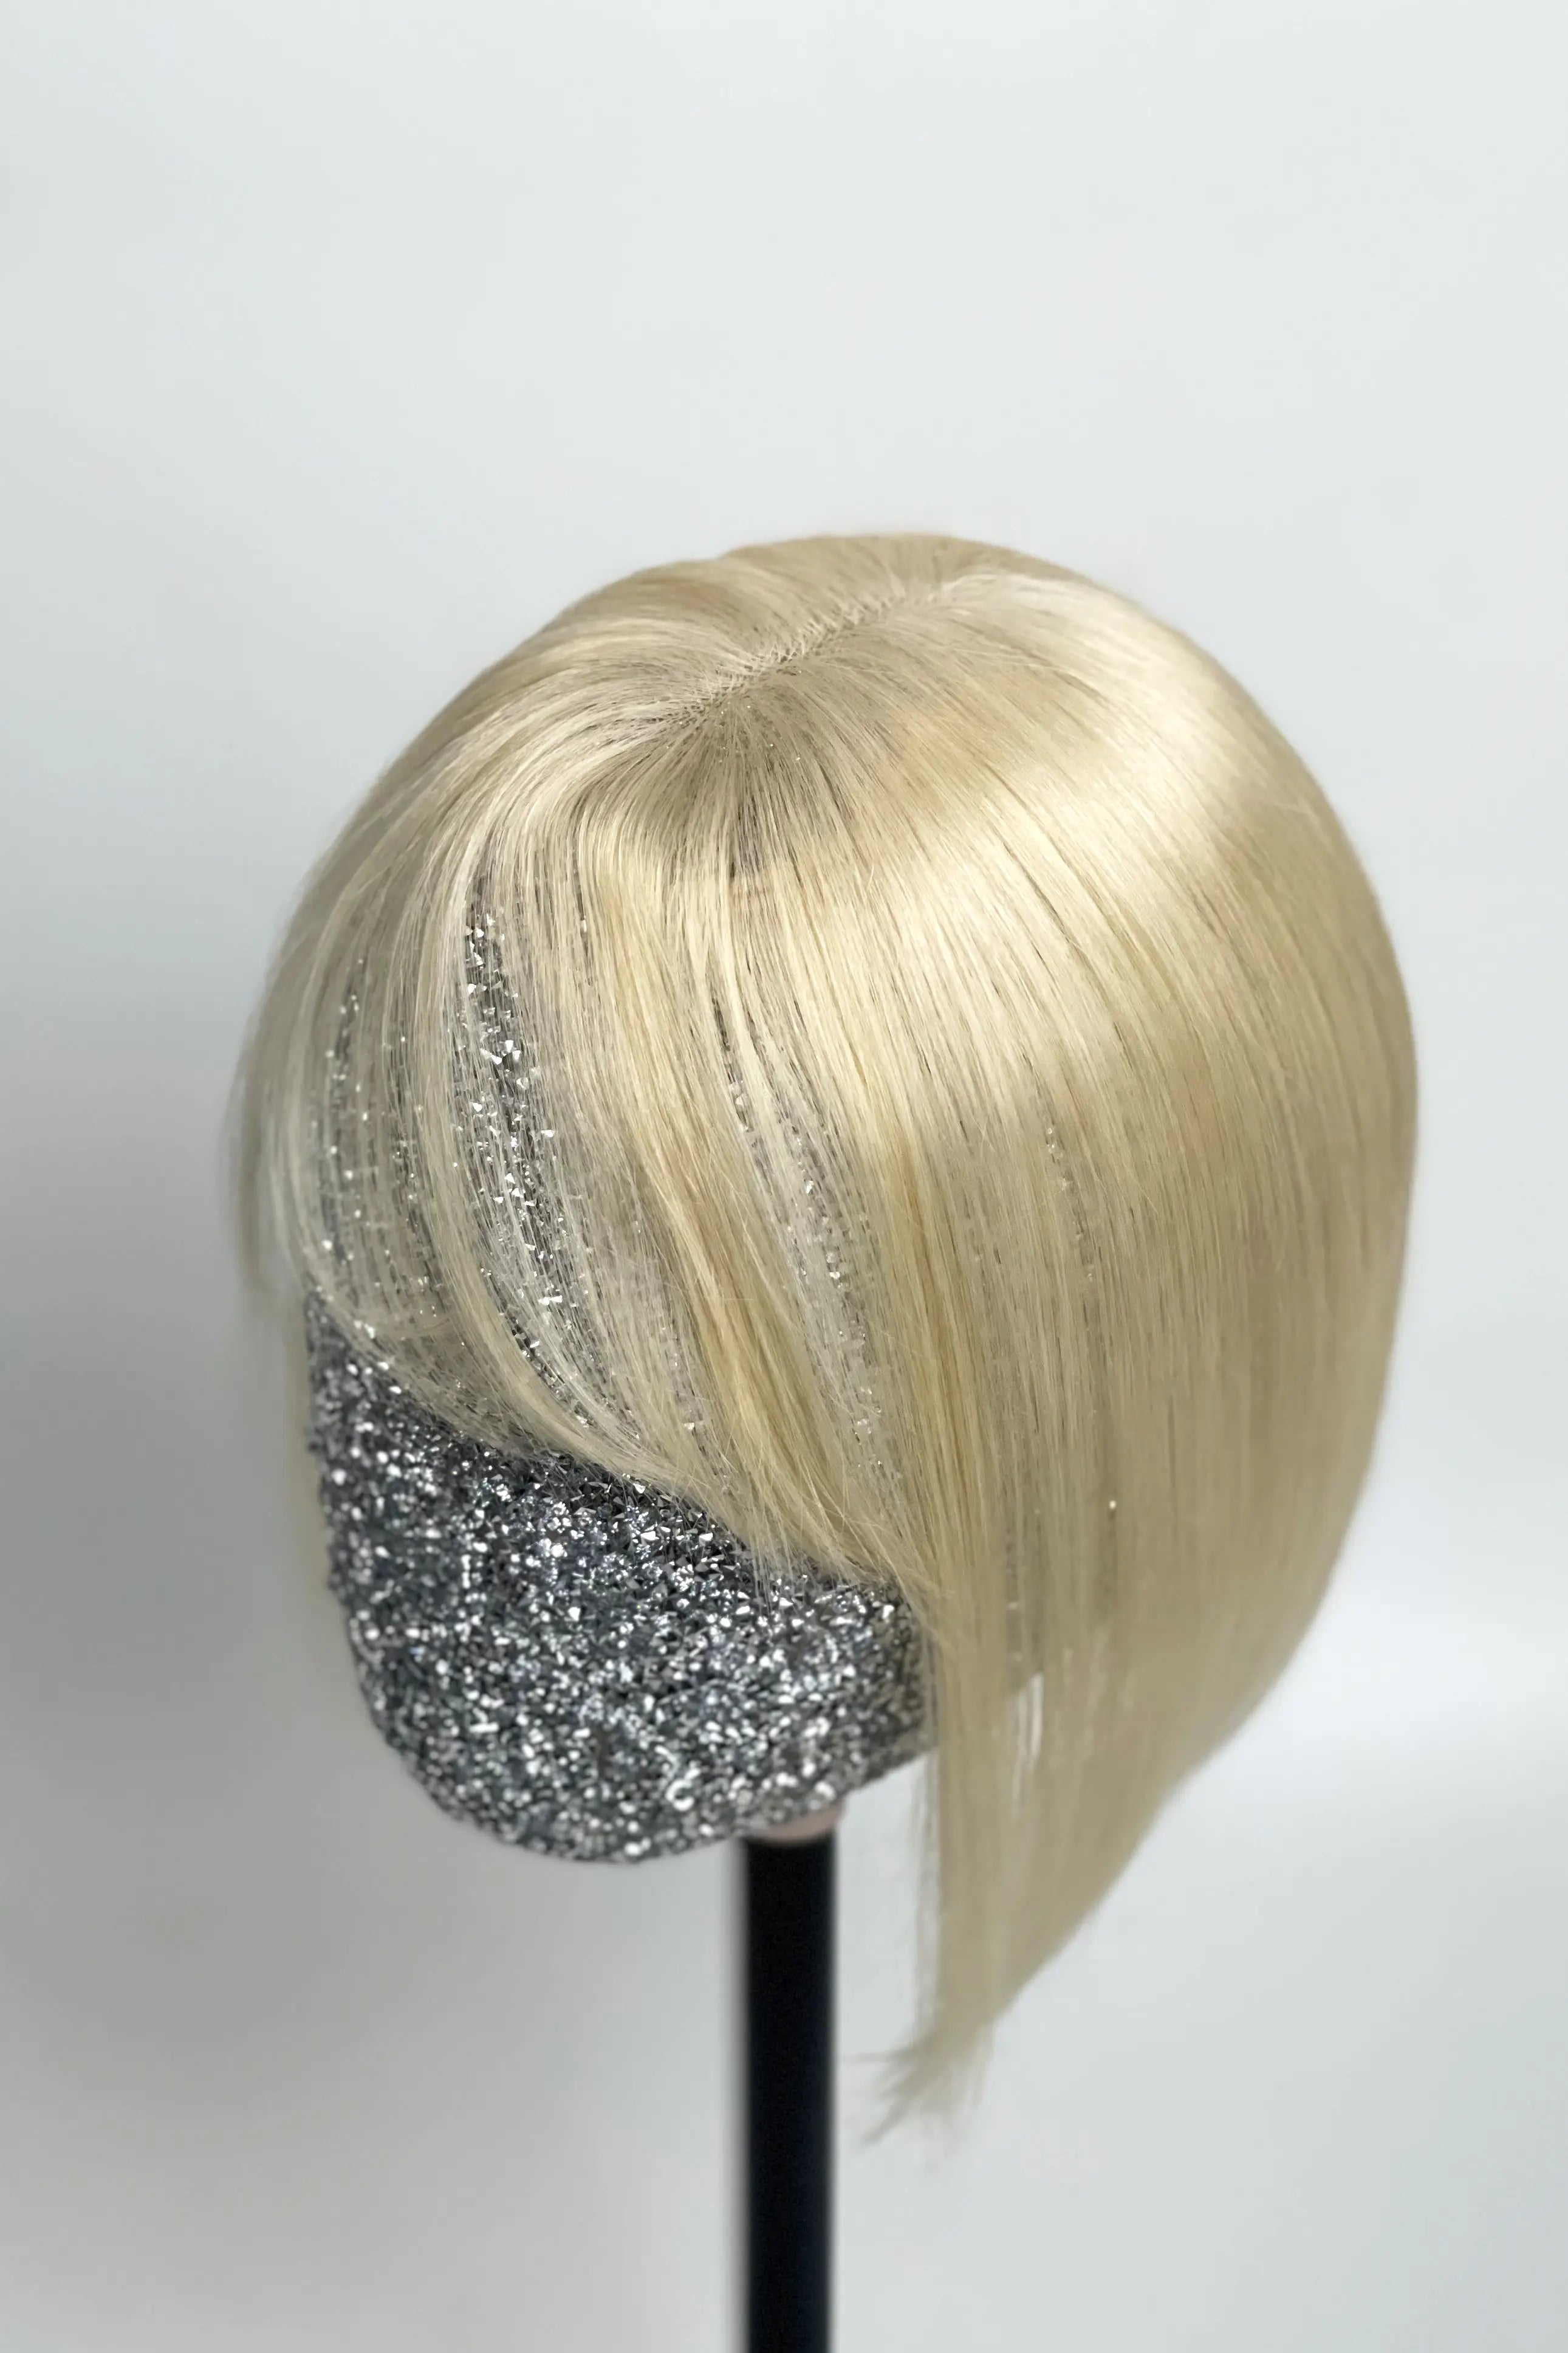 Mona-B Handmade Human Hair Topper with Bangs Lightest Blonde #613